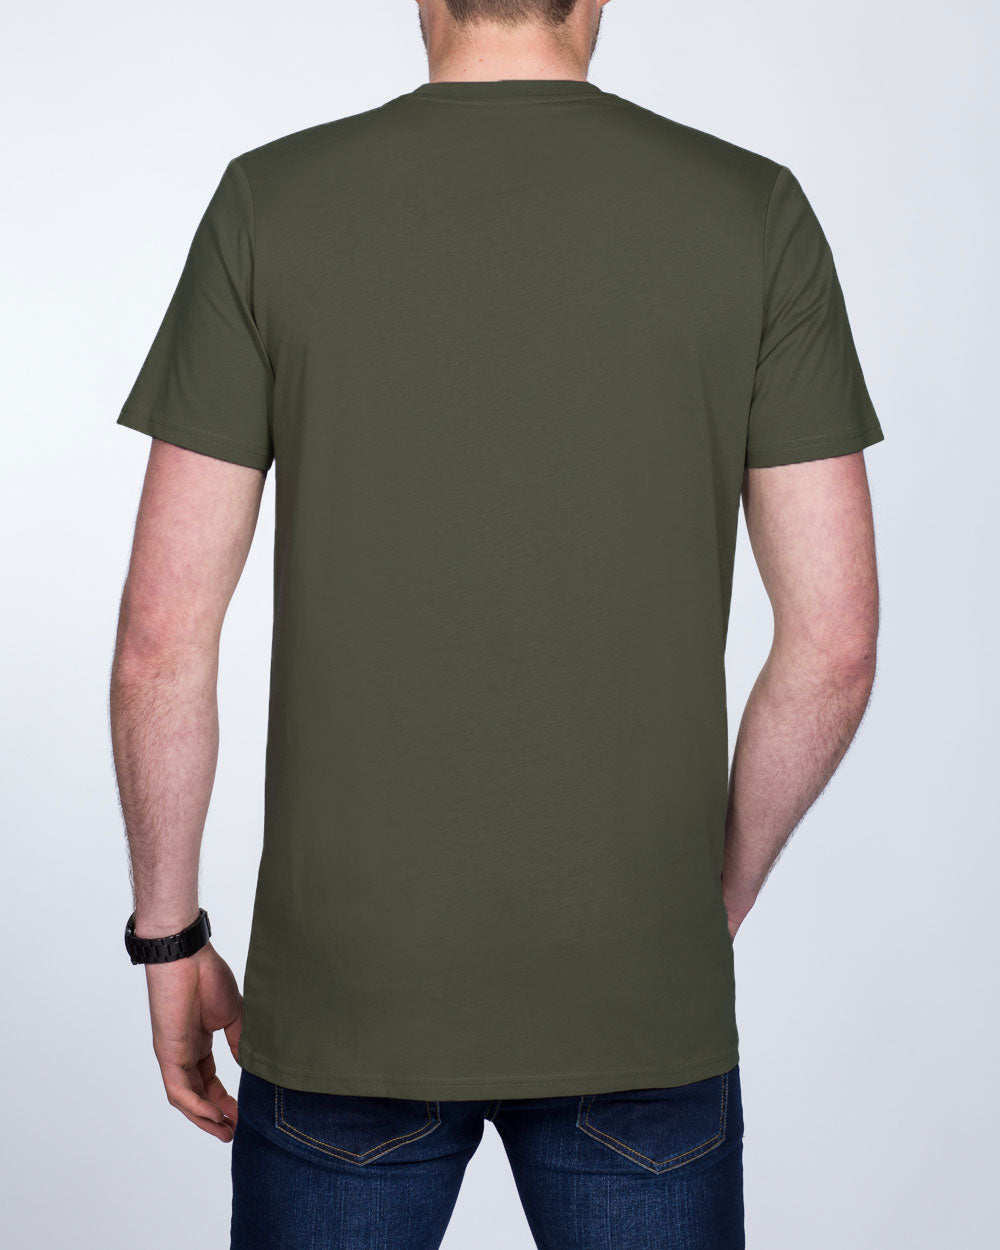 Girav Sydney Tall T-Shirt (dark olive)